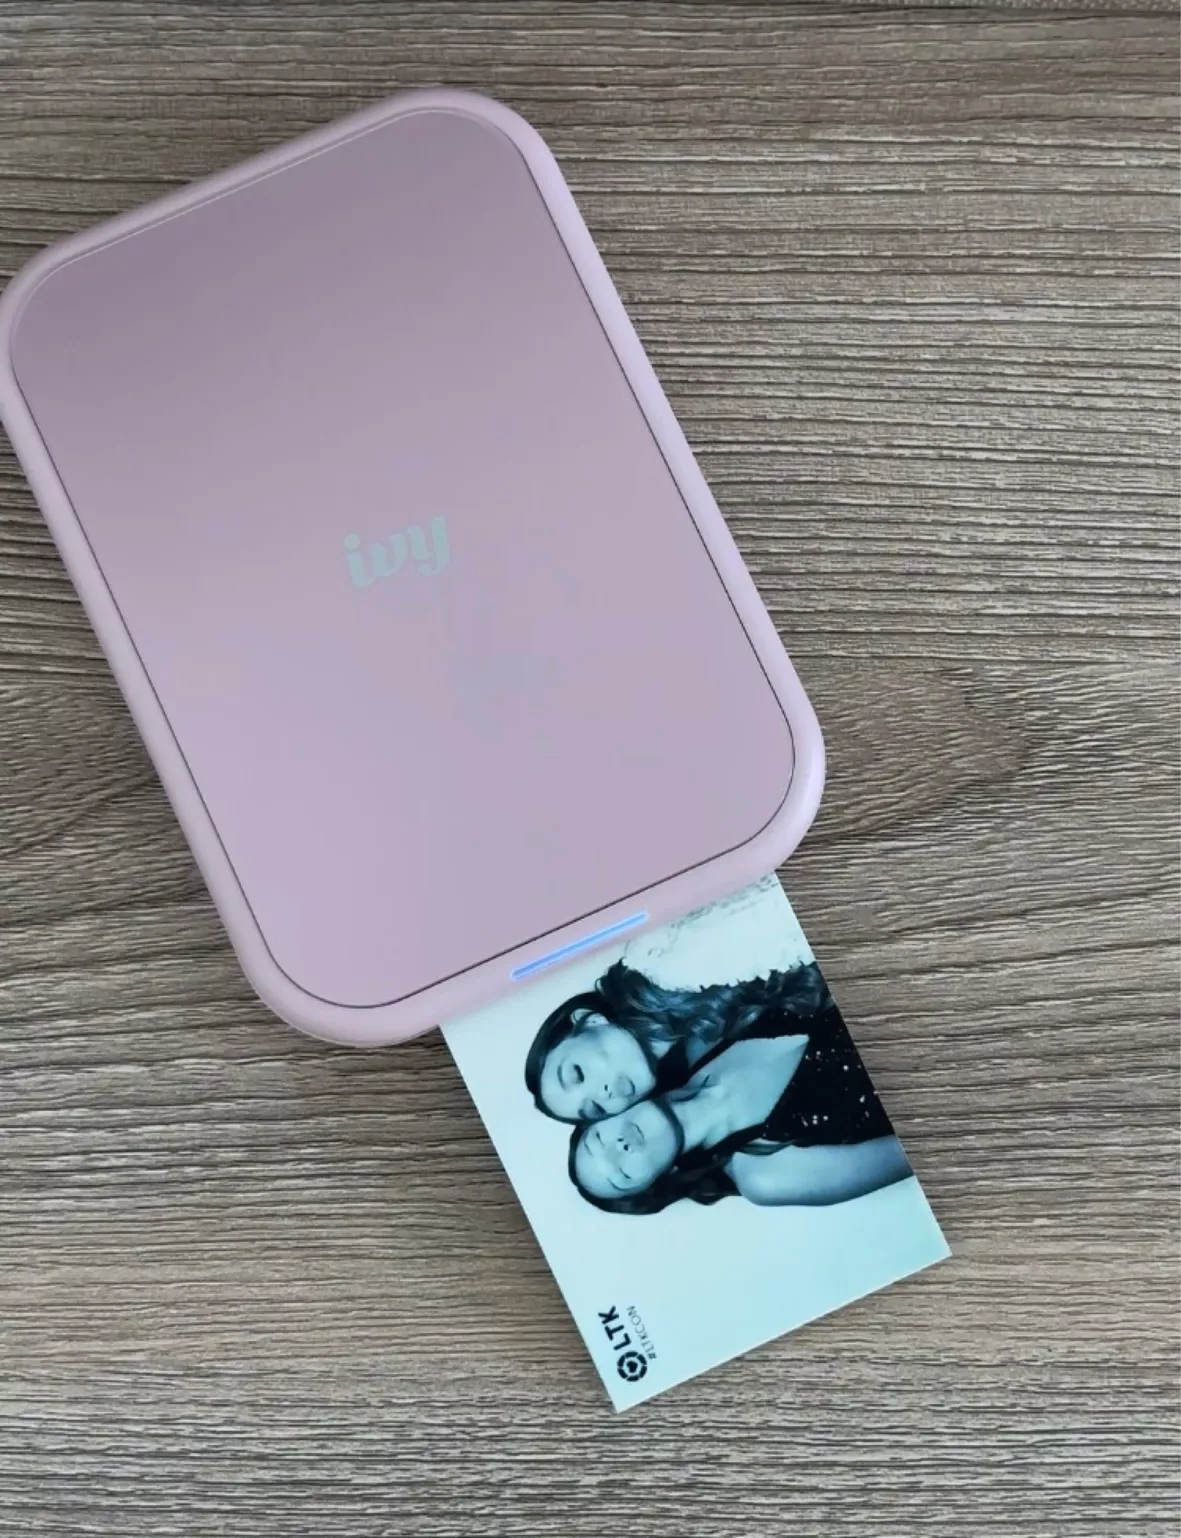 Canon IVY 2 Mini Photo Printer, Blush Pink